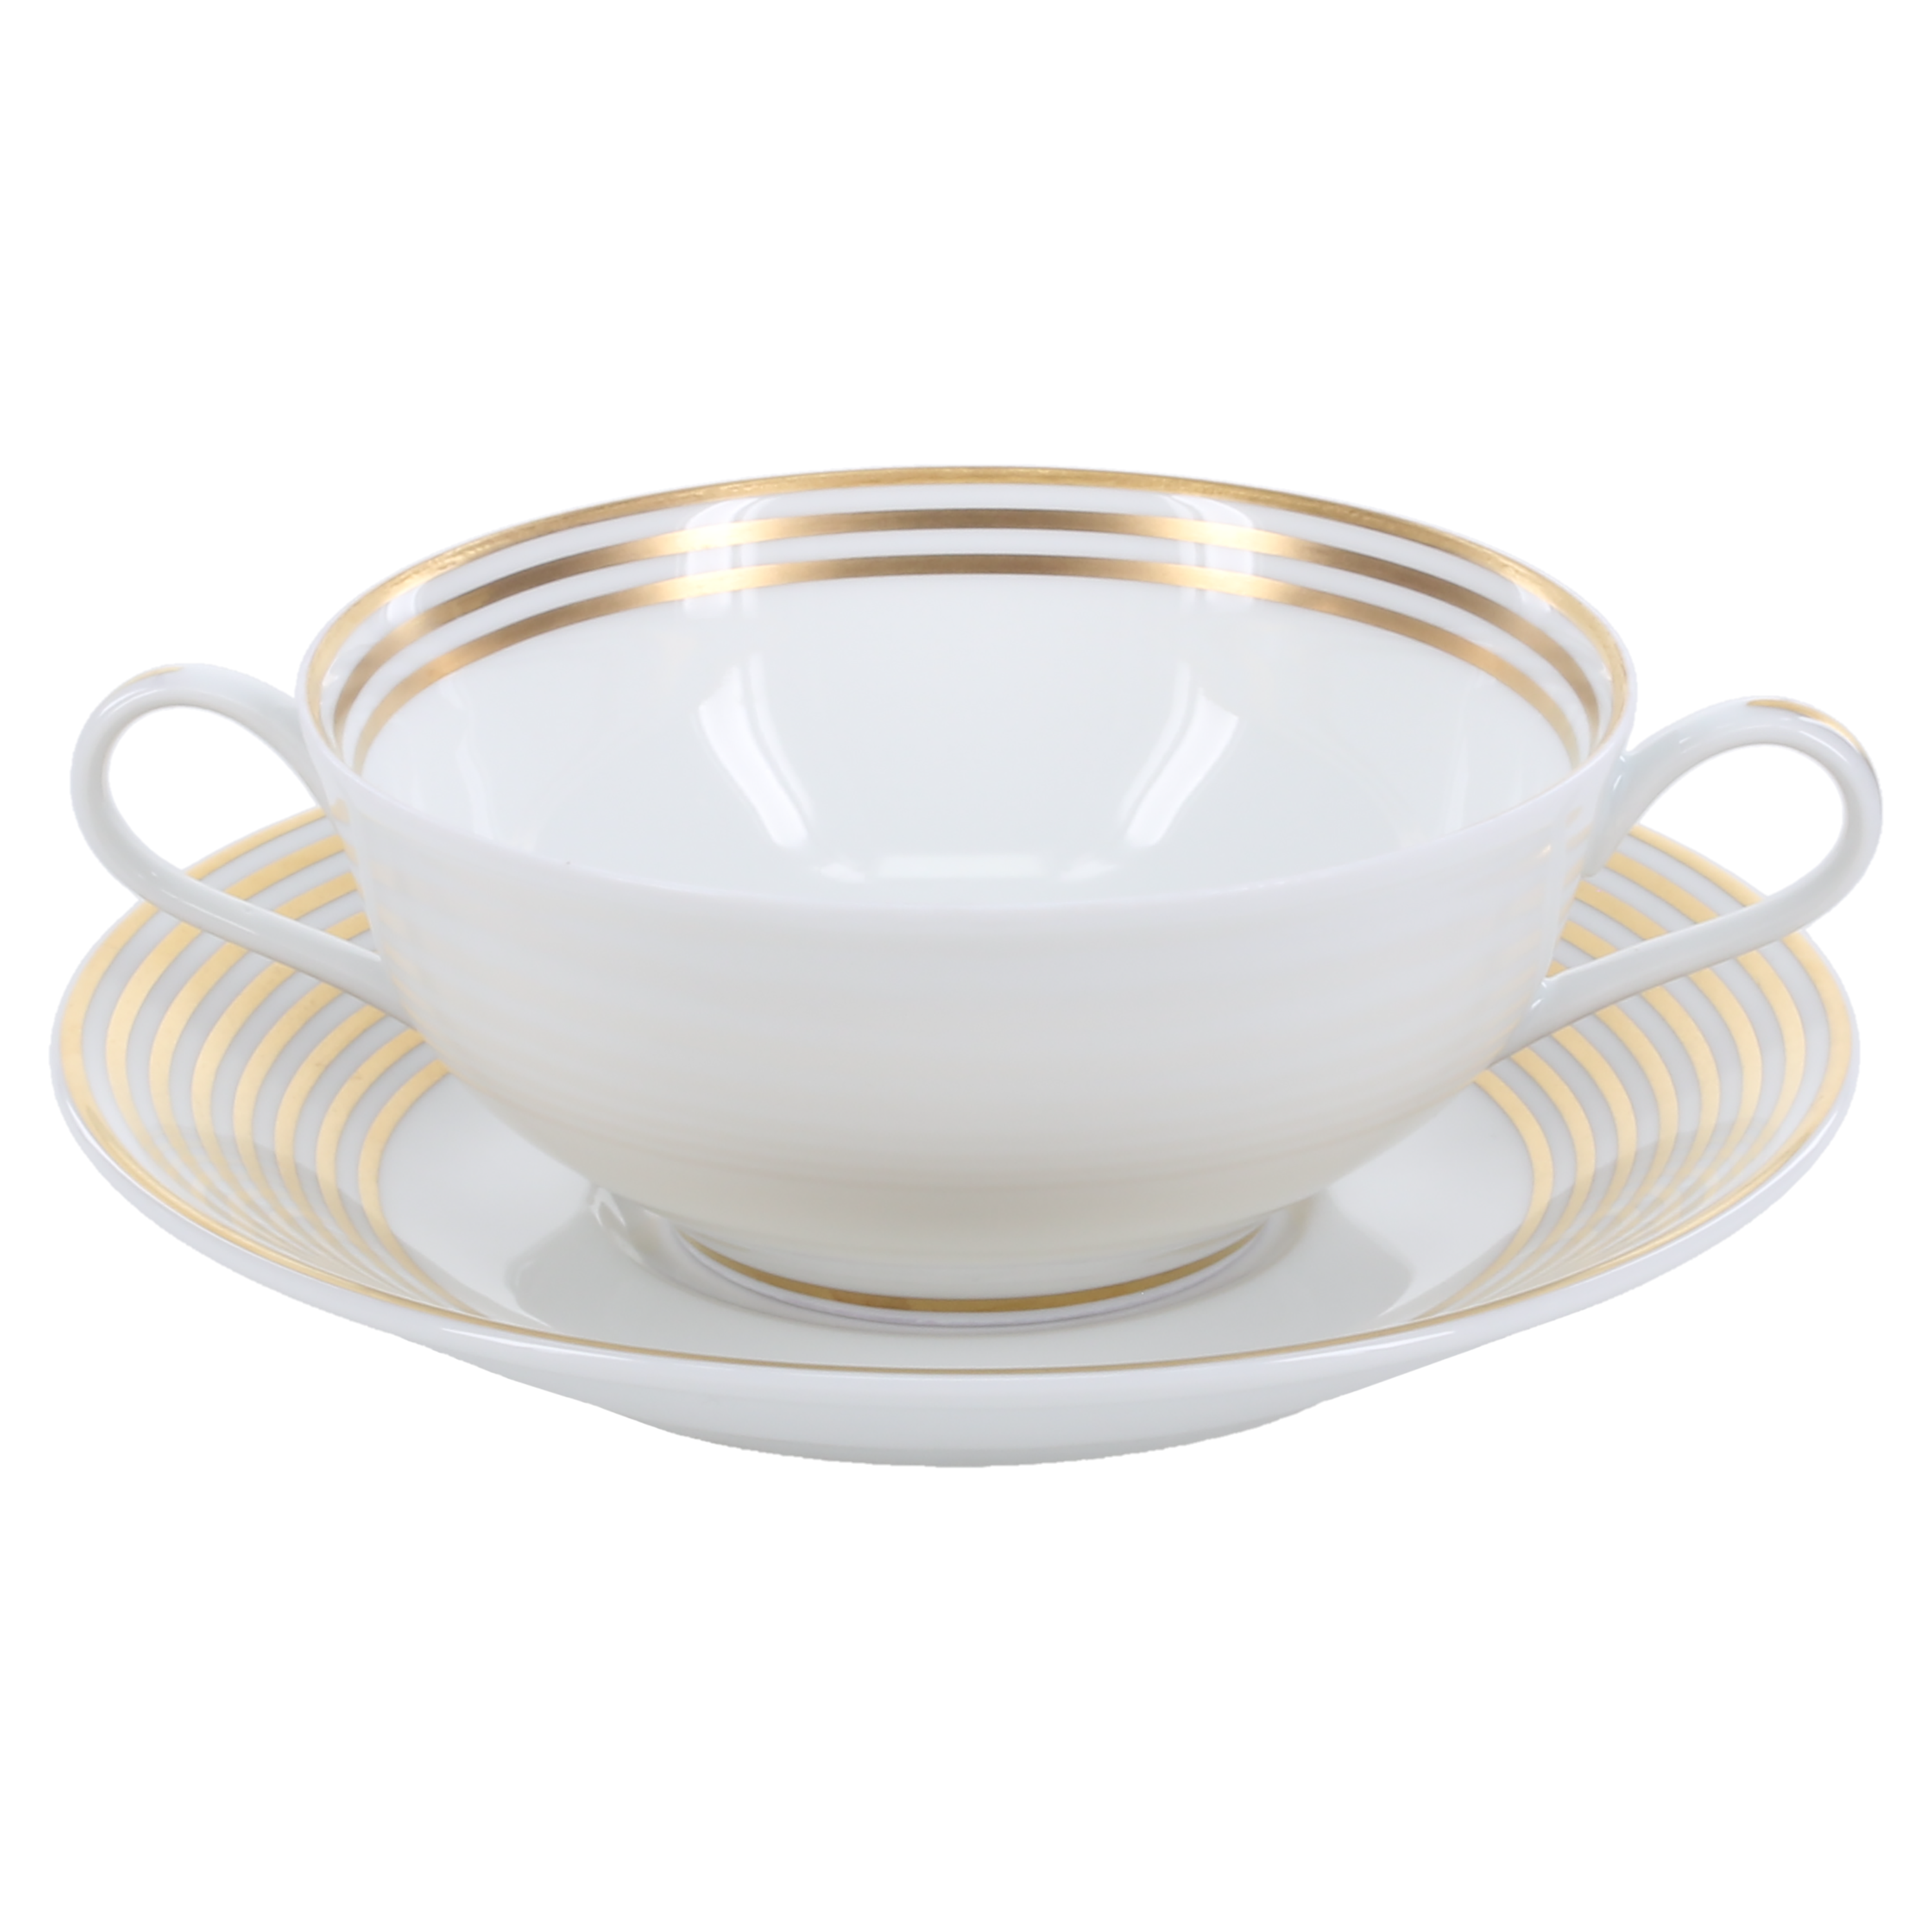 Latitudes gold - Cream soup cup and saucer 0.3 litre